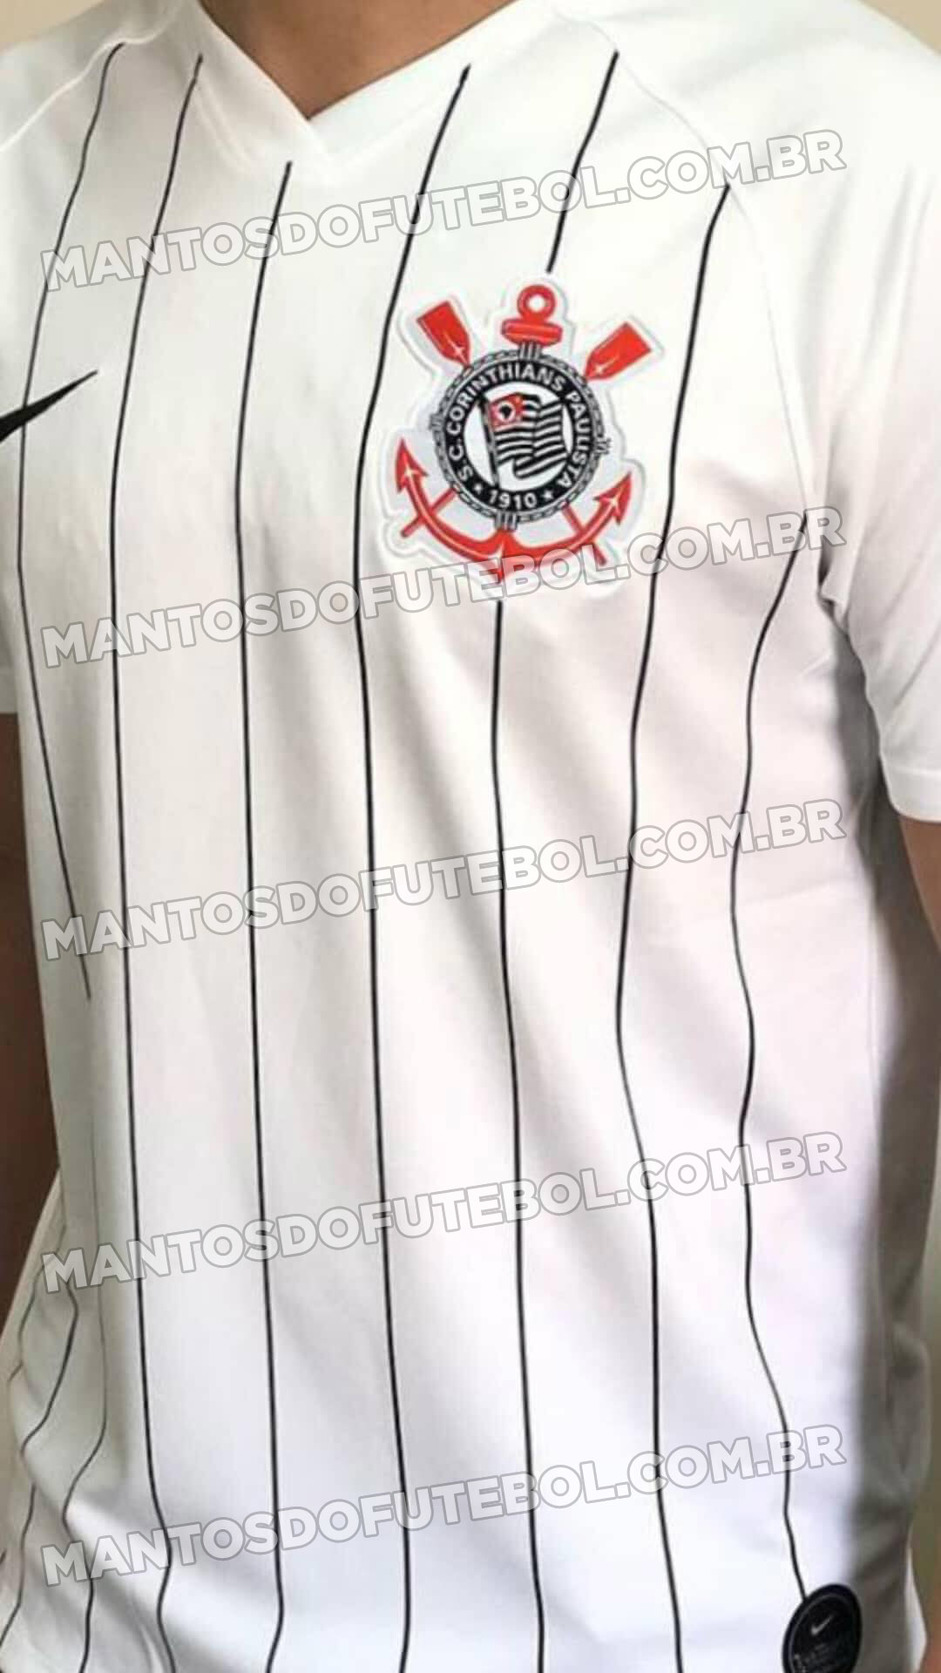 Camisa Corinthians 2019